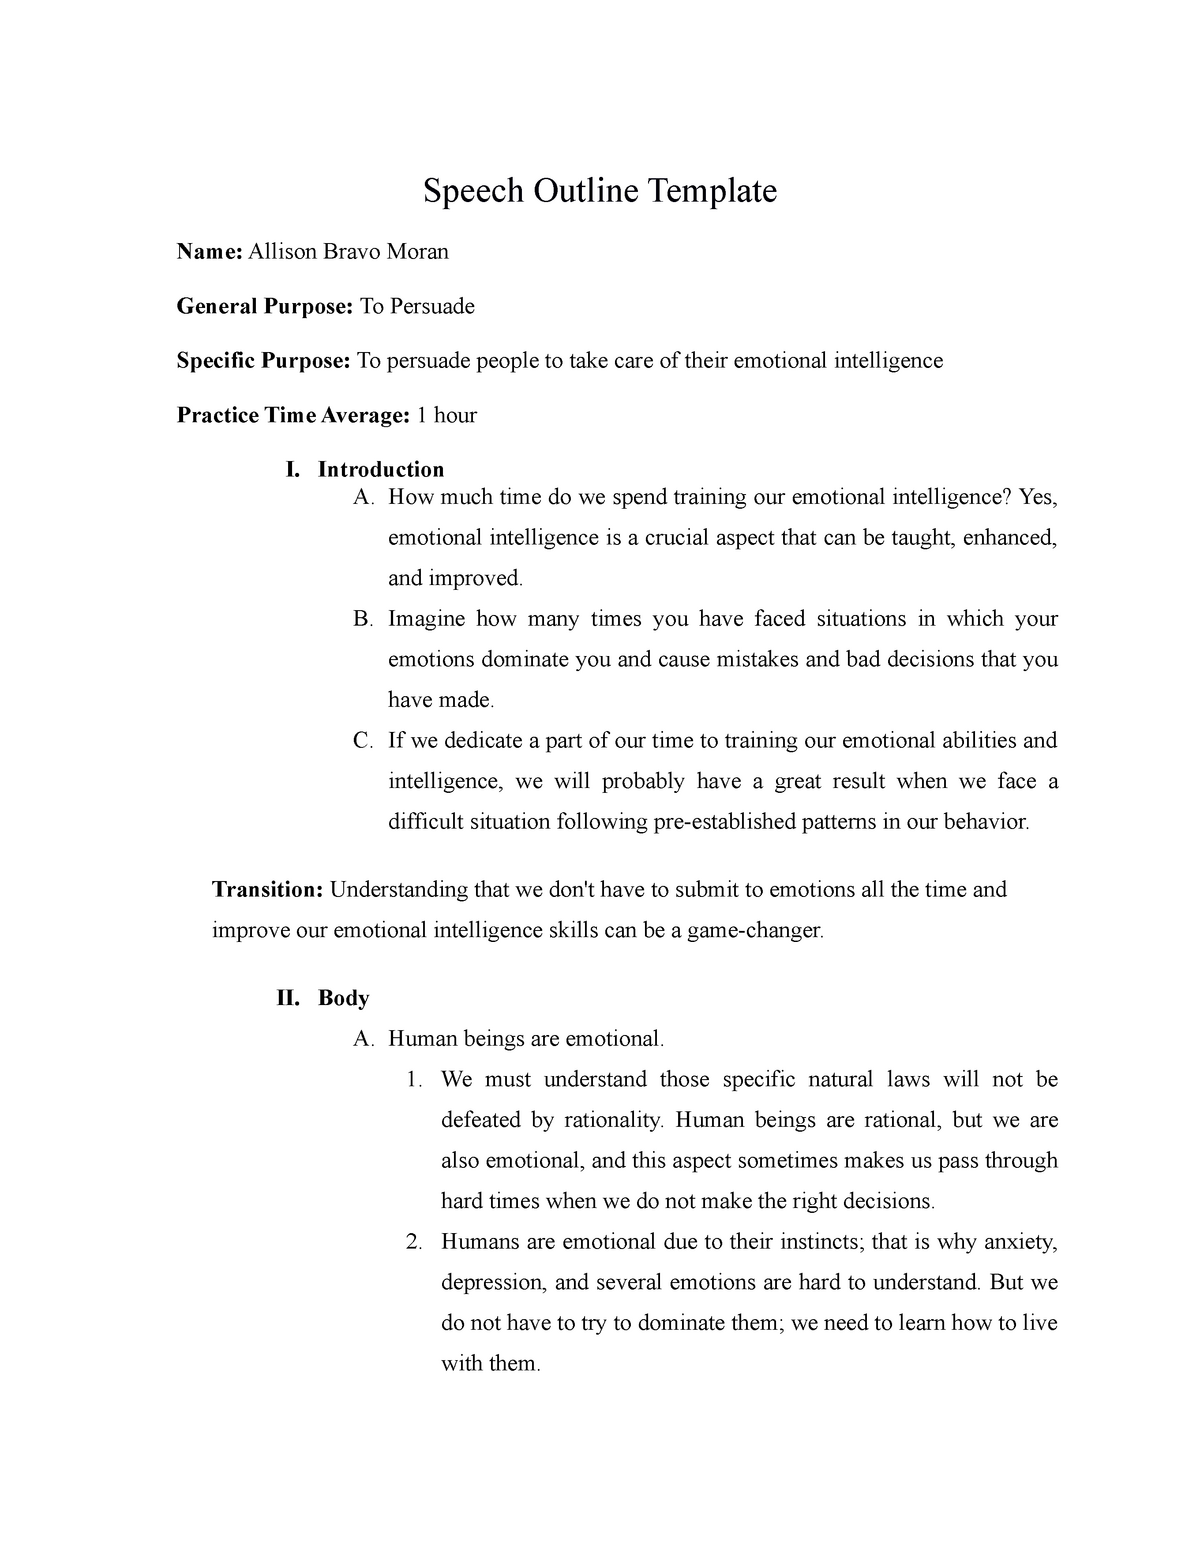 ted-talk-speech-outline-speech-outline-template-name-allison-bravo